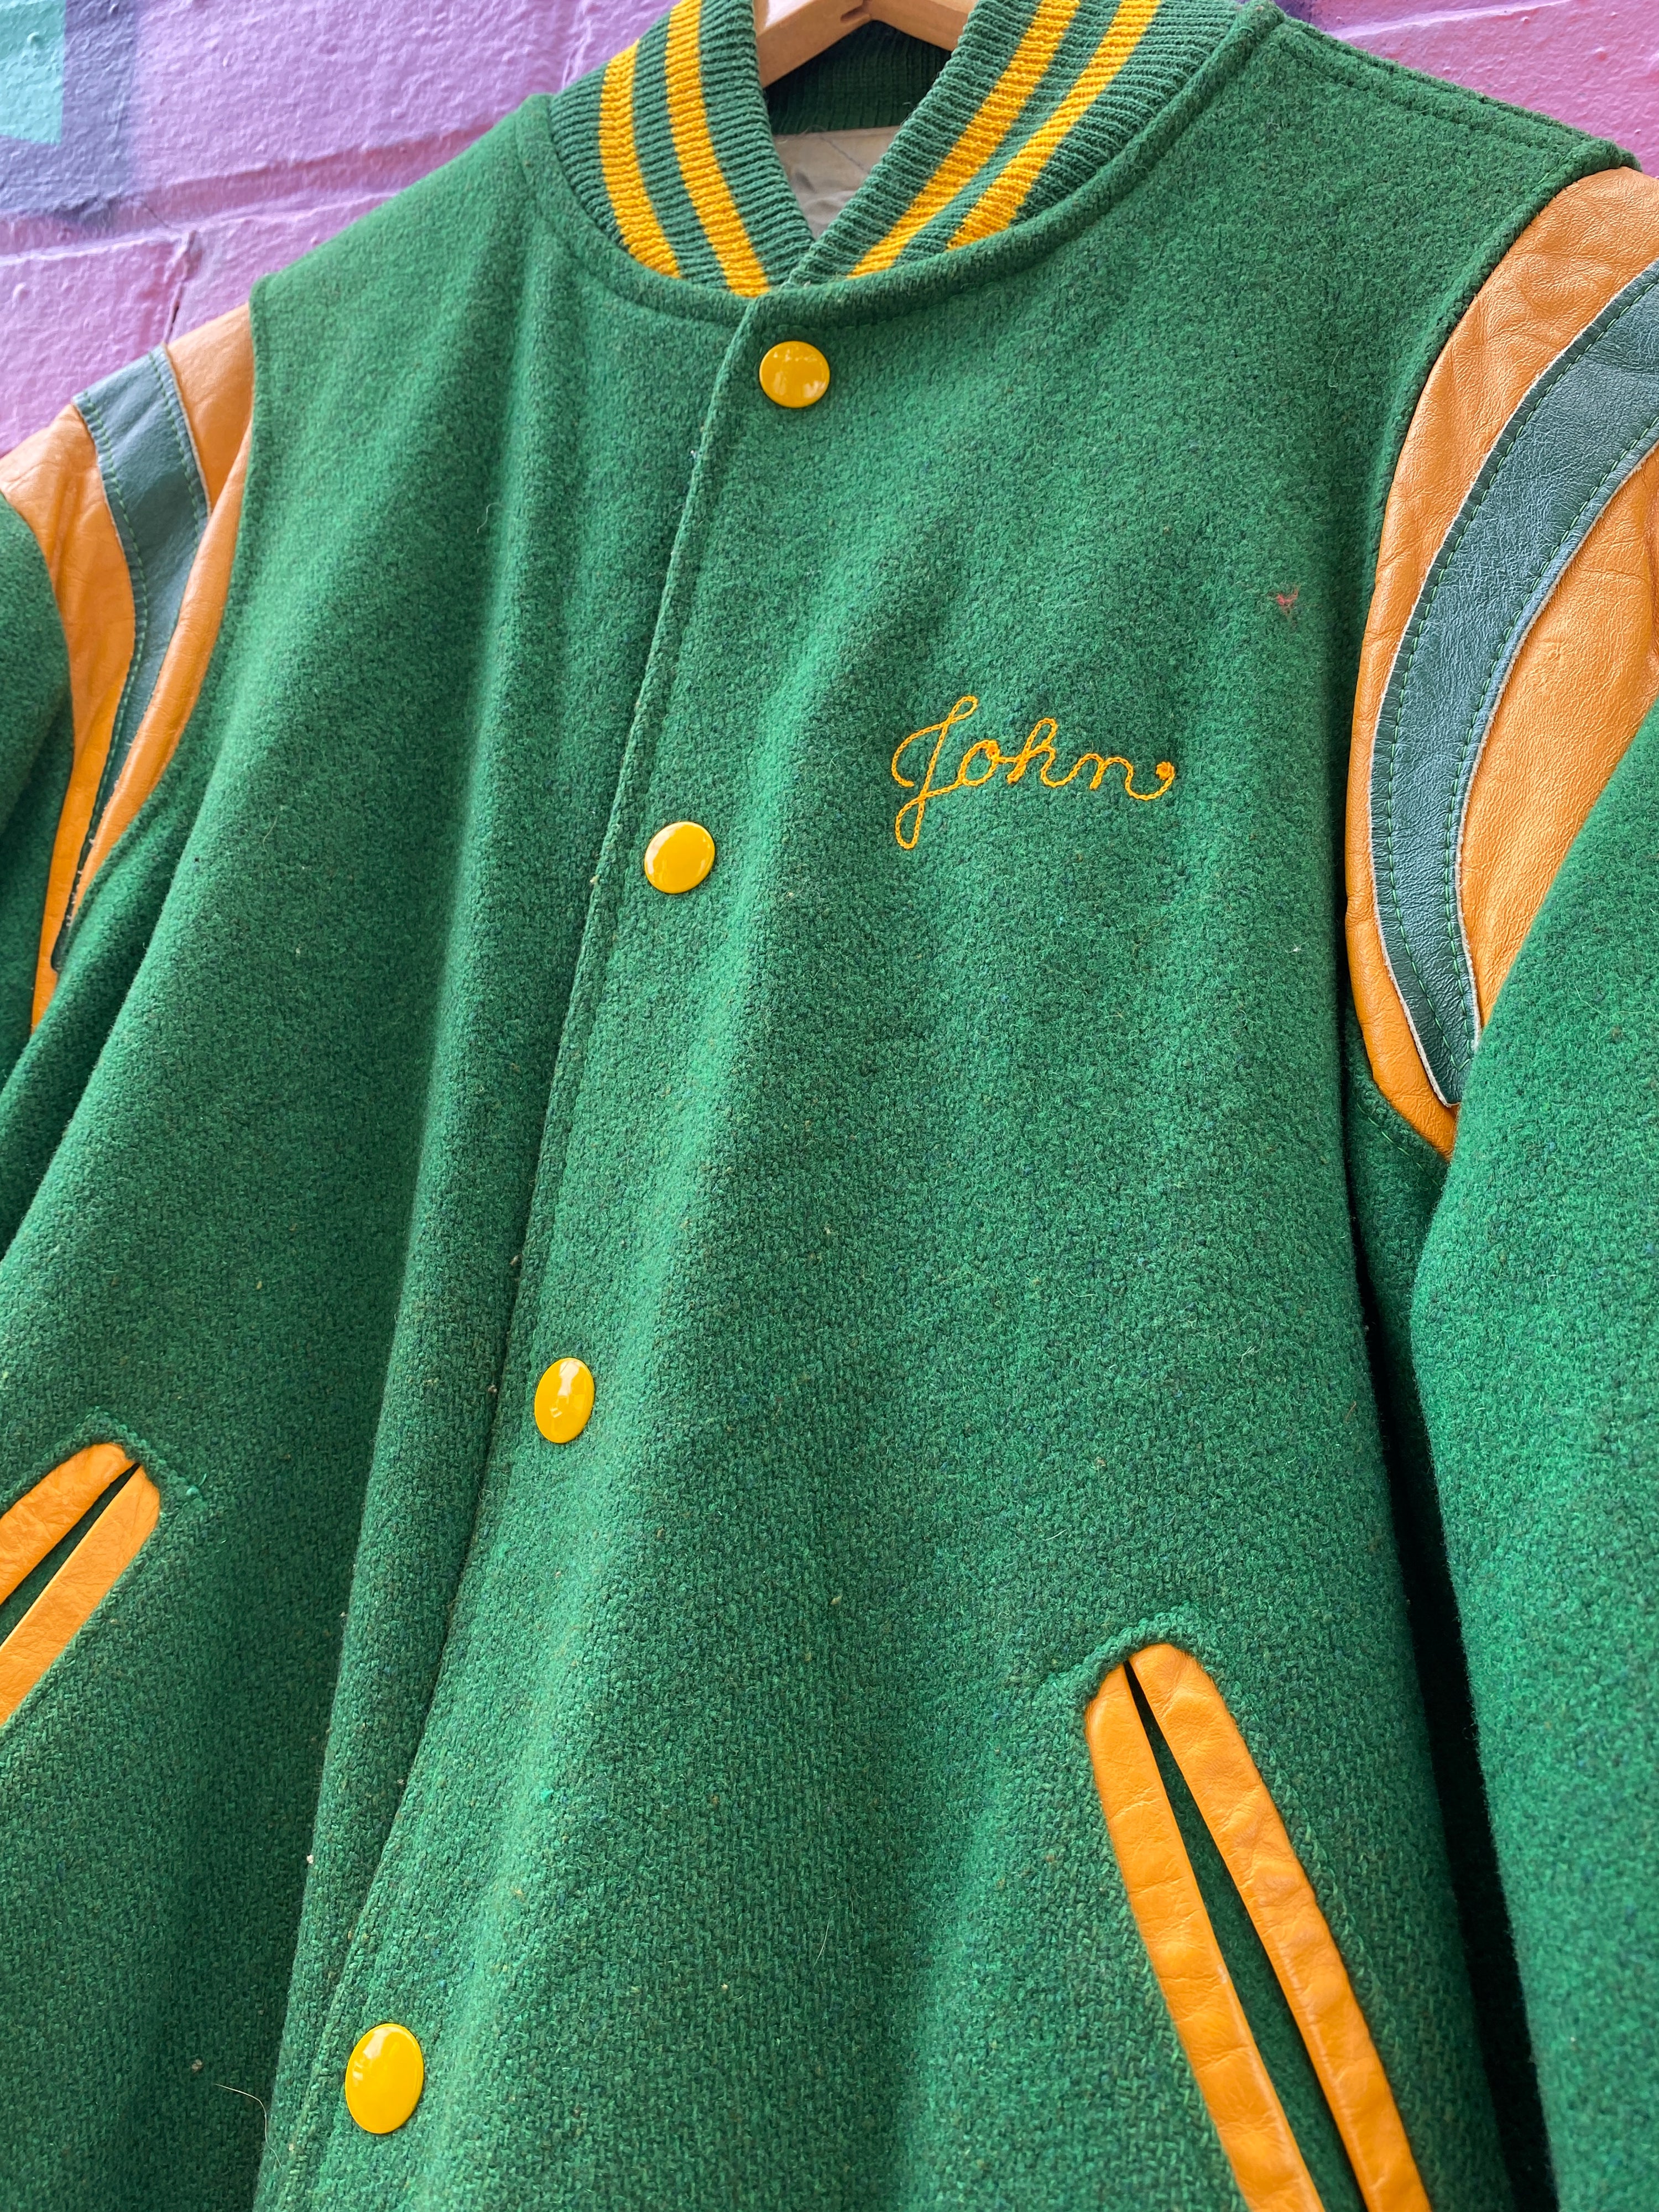 M - Vintage 'Bishop Flaget Panthers' Varsity Jacket Green